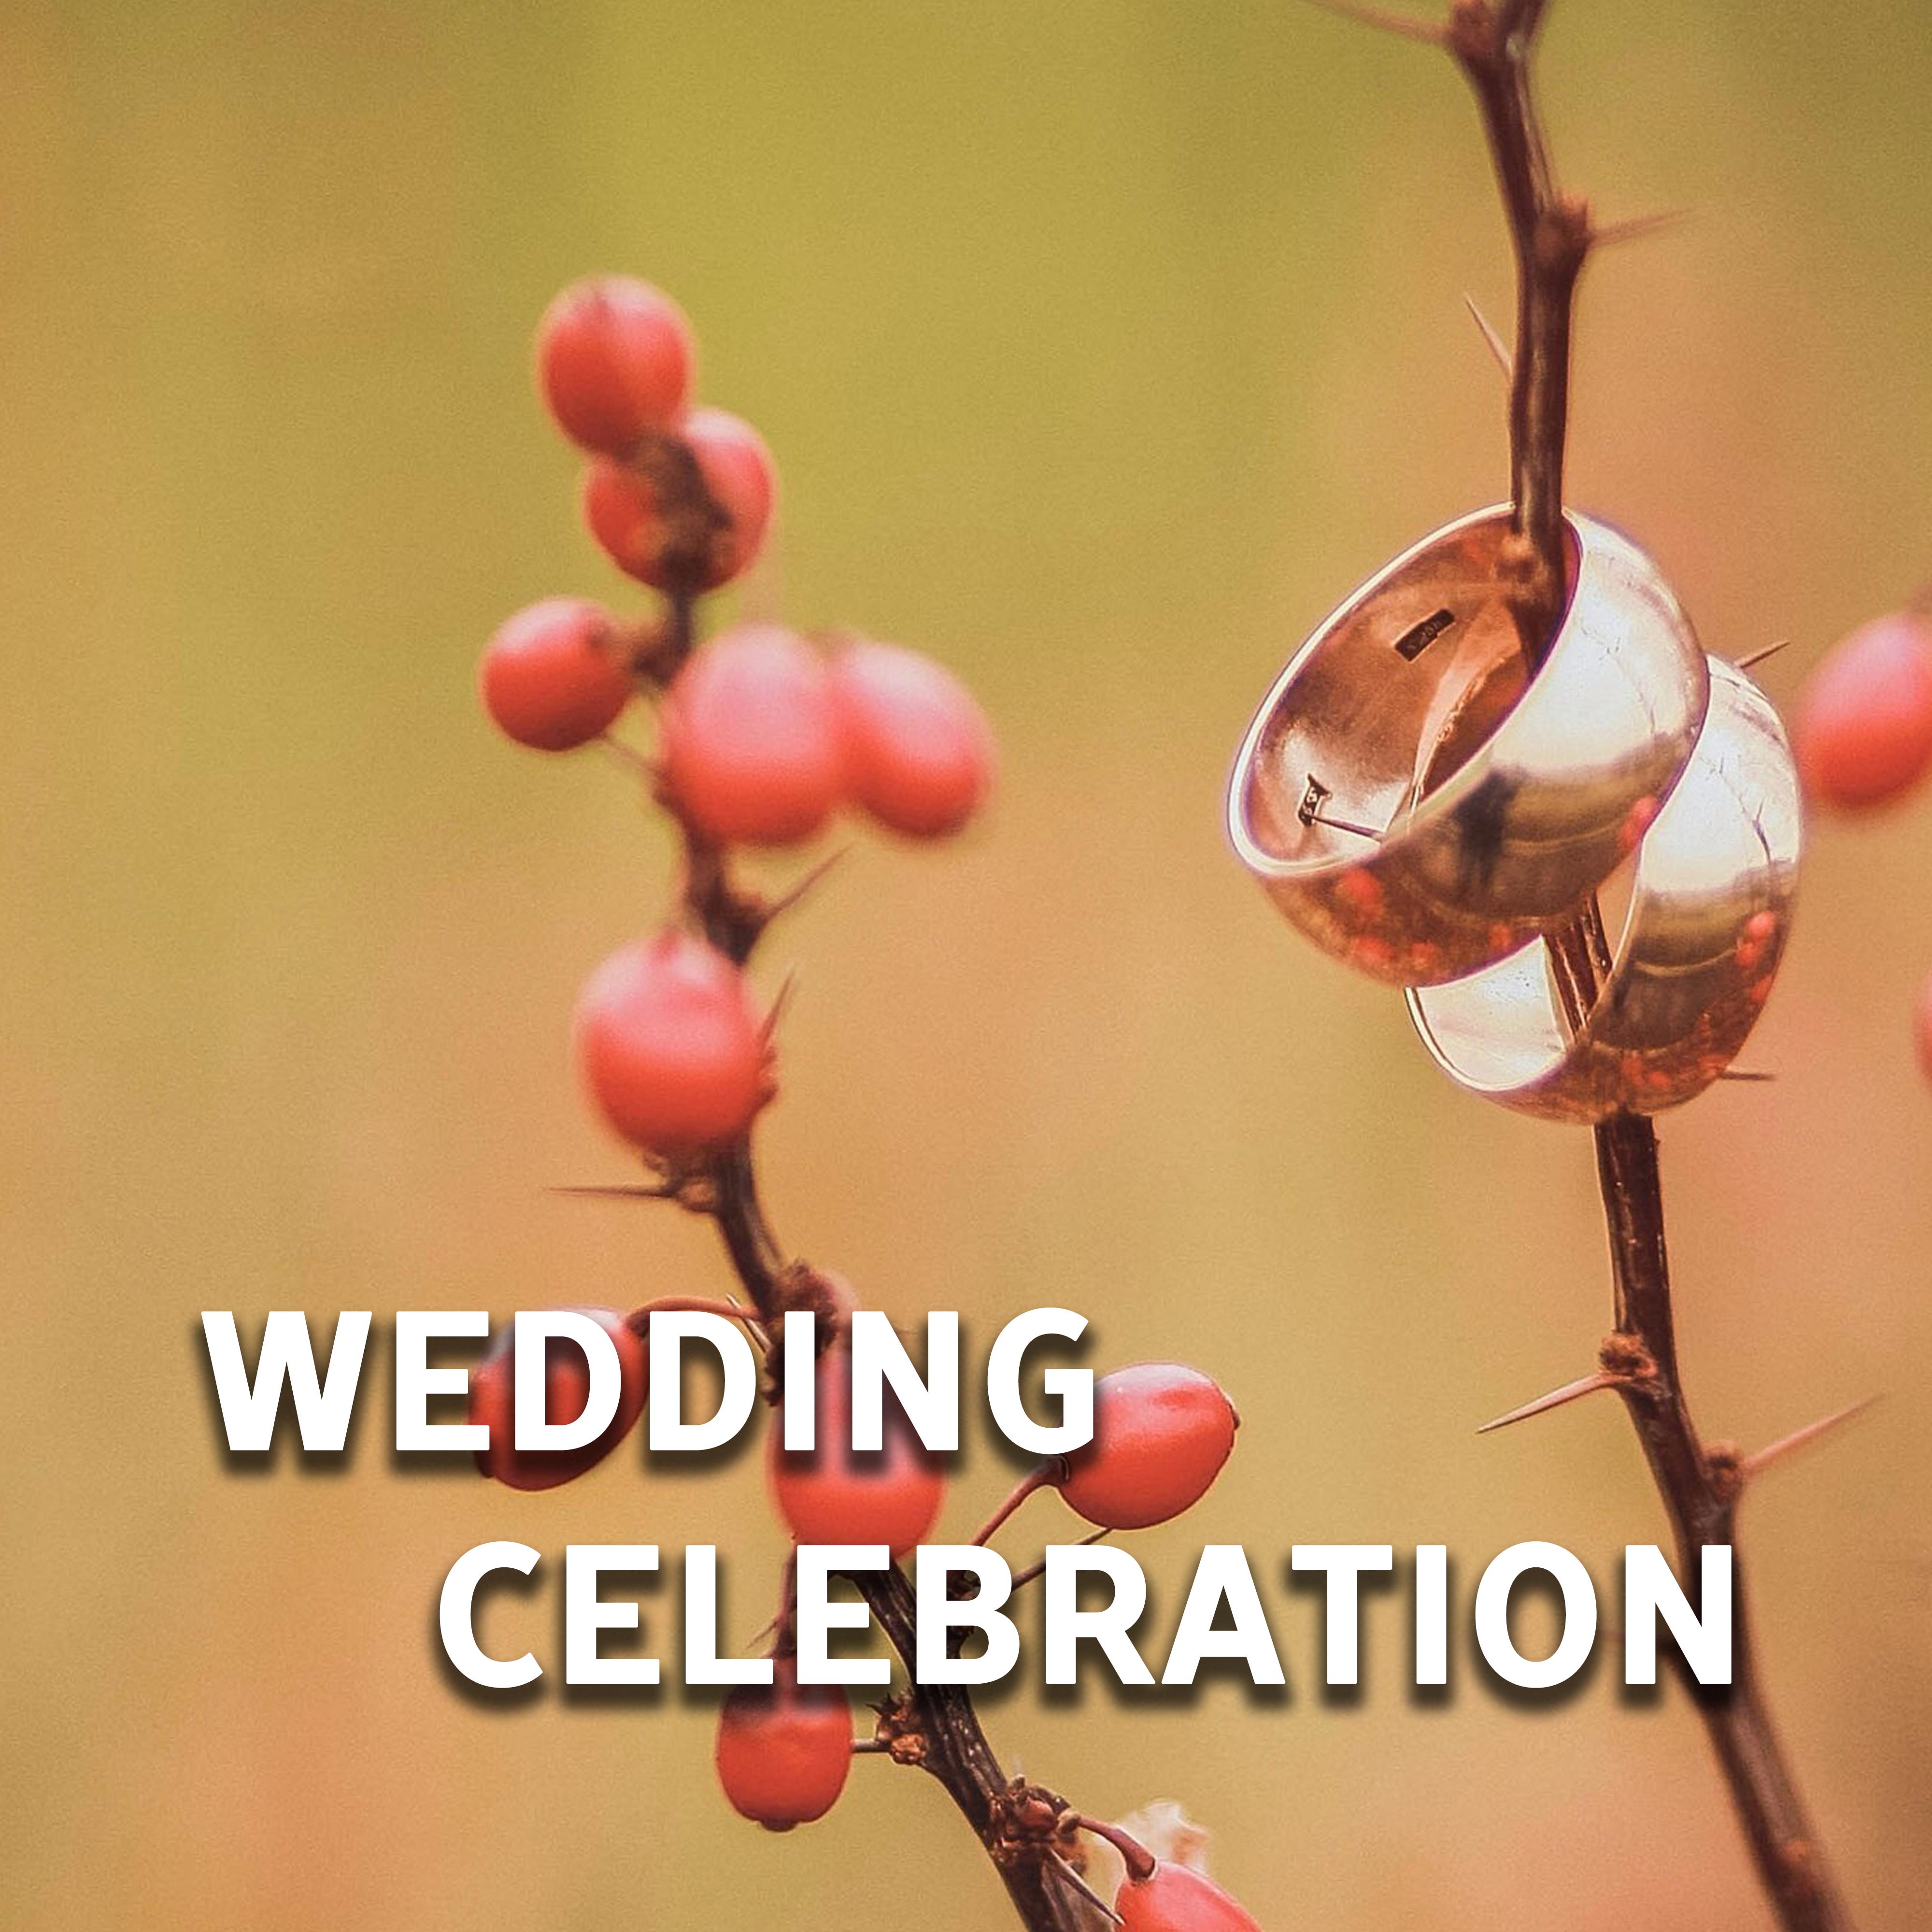 Wedding Celebration – Relaxation Sounds for Lovers, Wedding Music, Instrumental Jazz, True Love, Gentle Piano, Saxophone